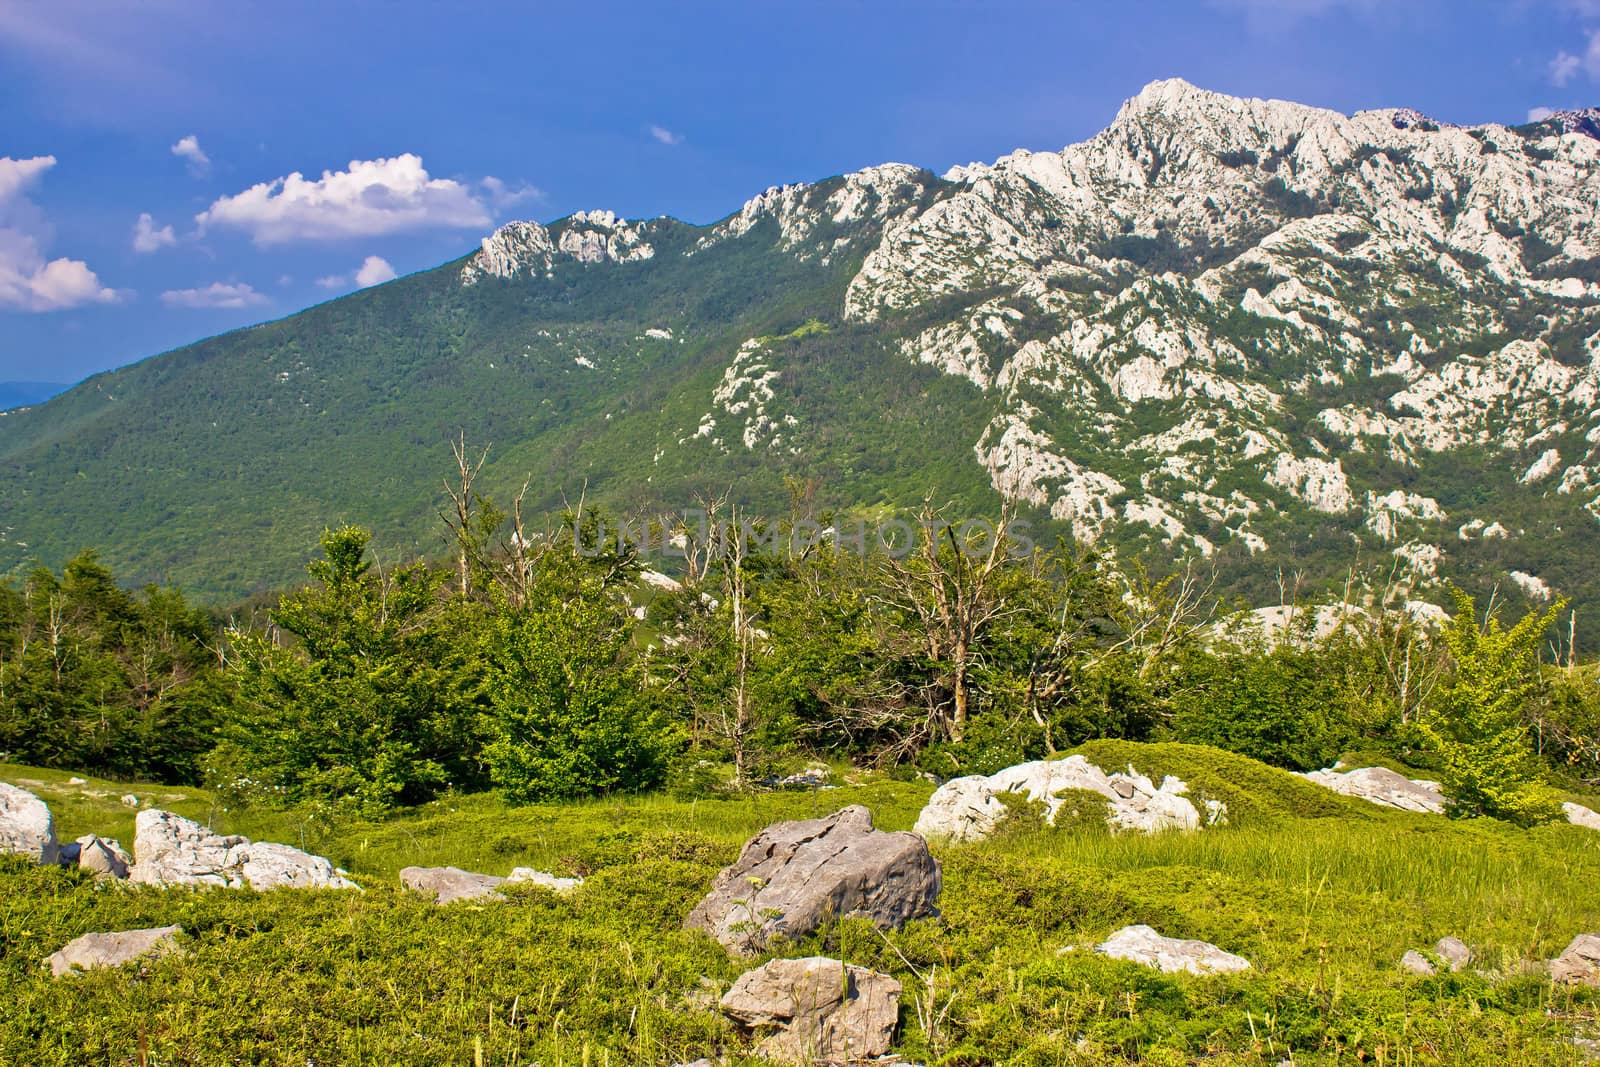 Crnopac peak of Velebit mountain by xbrchx